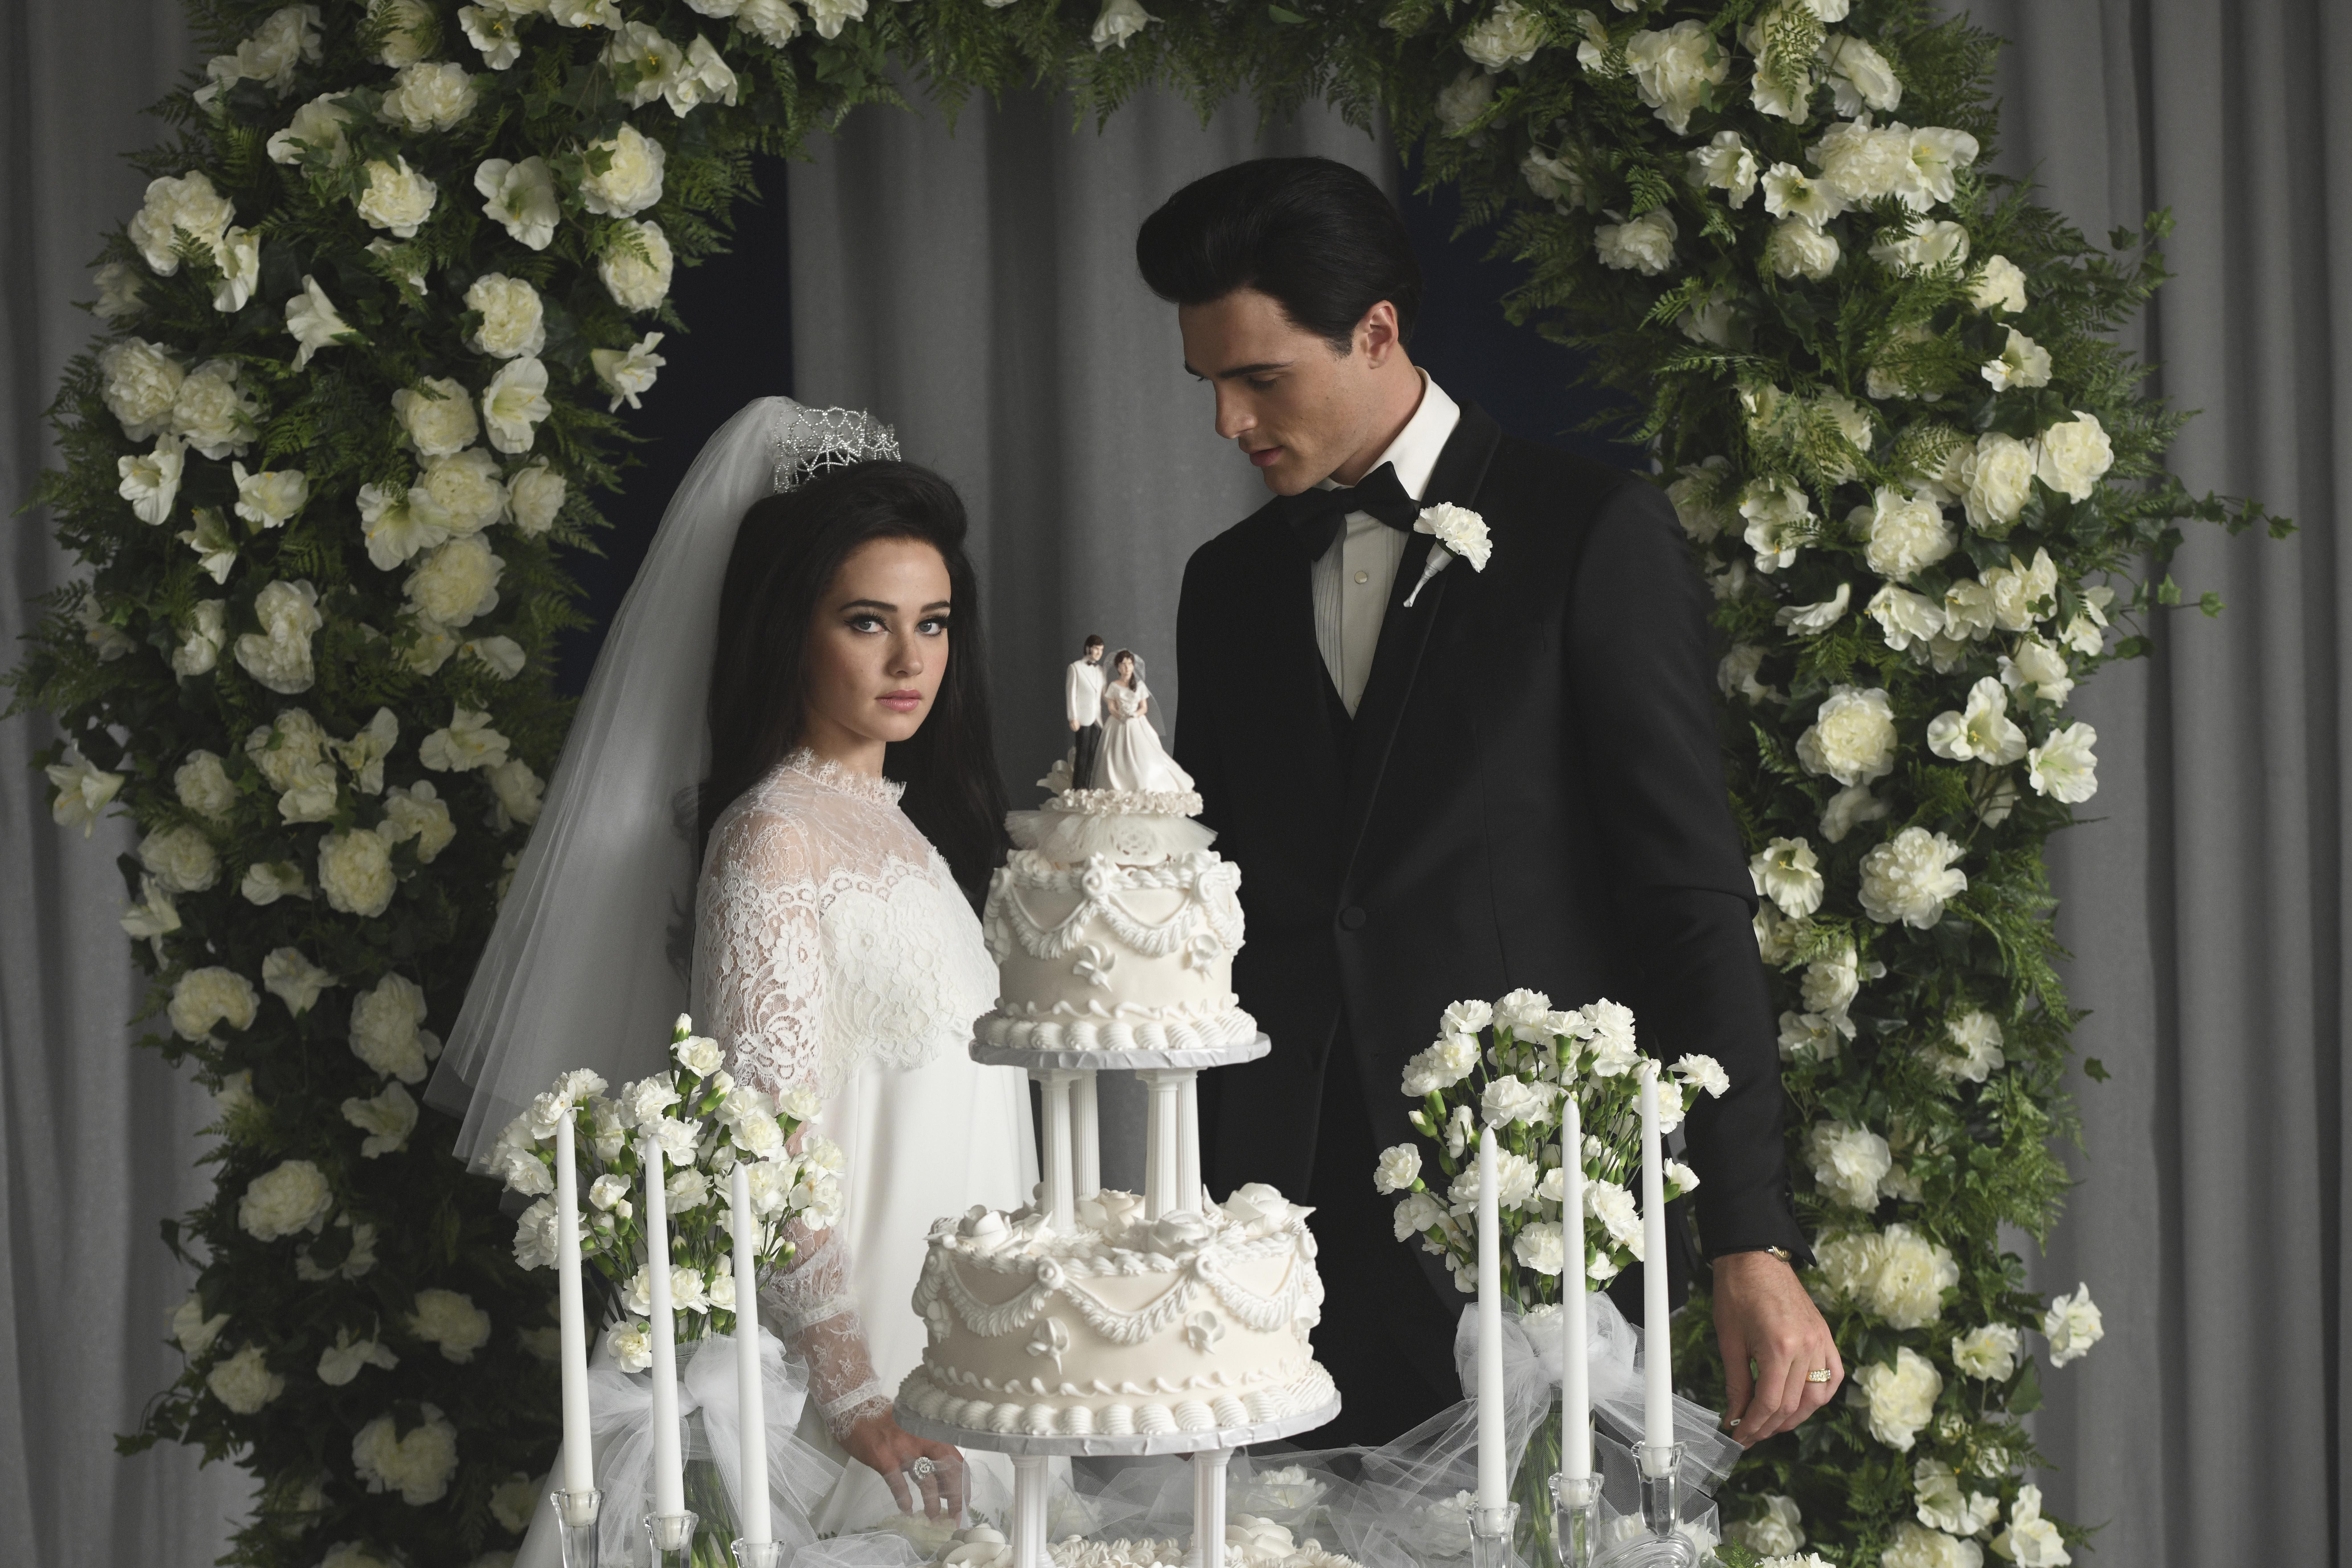 See Priscilla Presley's wedding dress in biopic teaser